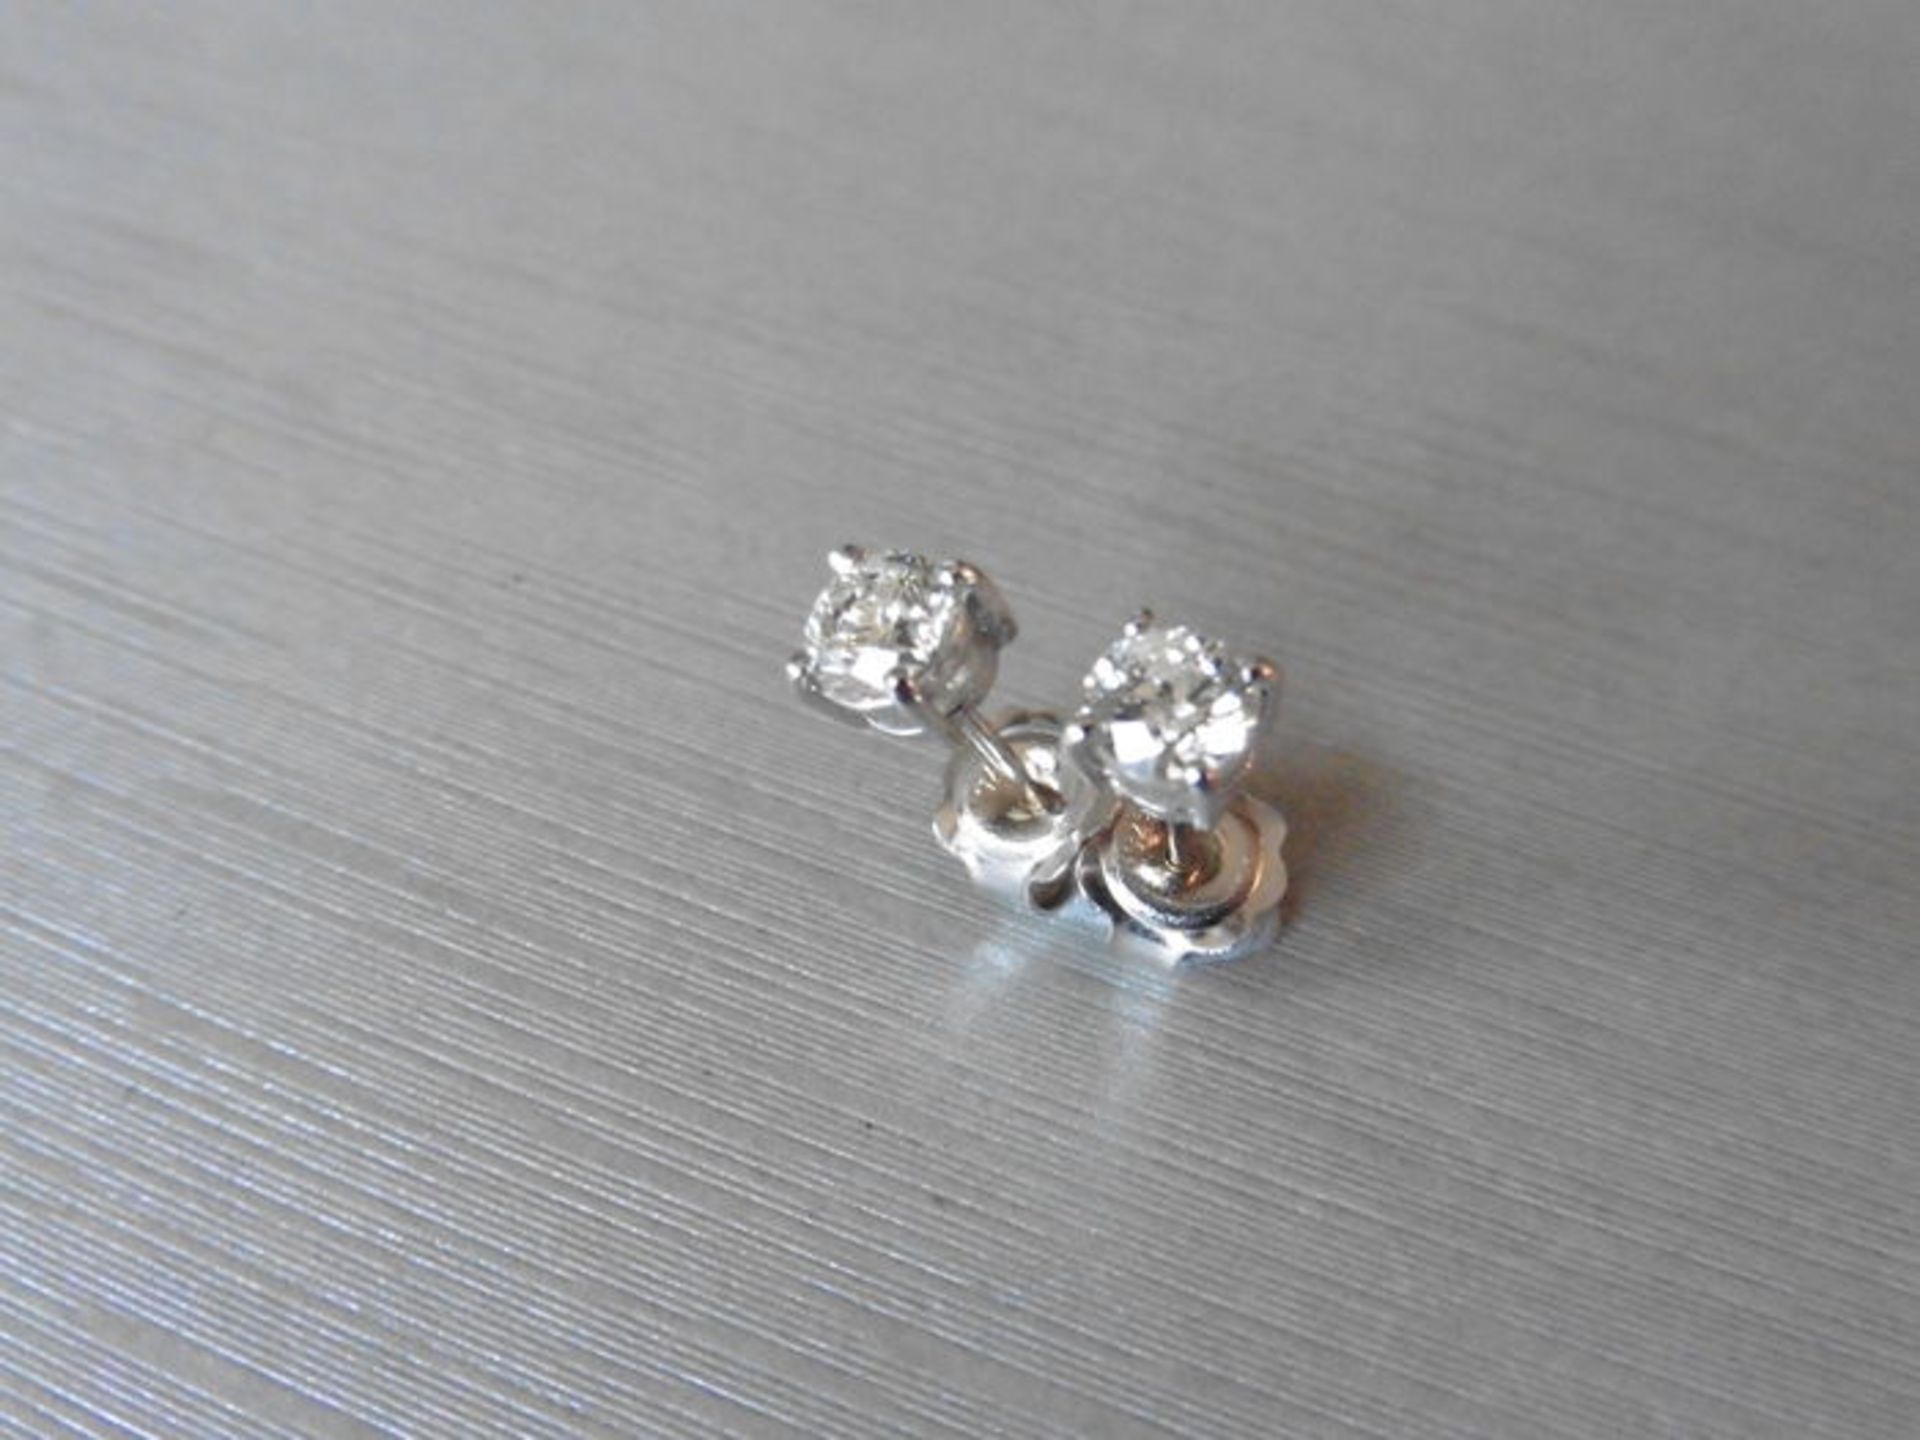 0.60ct Diamond solitaire earrings set with brilliant cut diamonds,I/J colour si2 clarity. Four